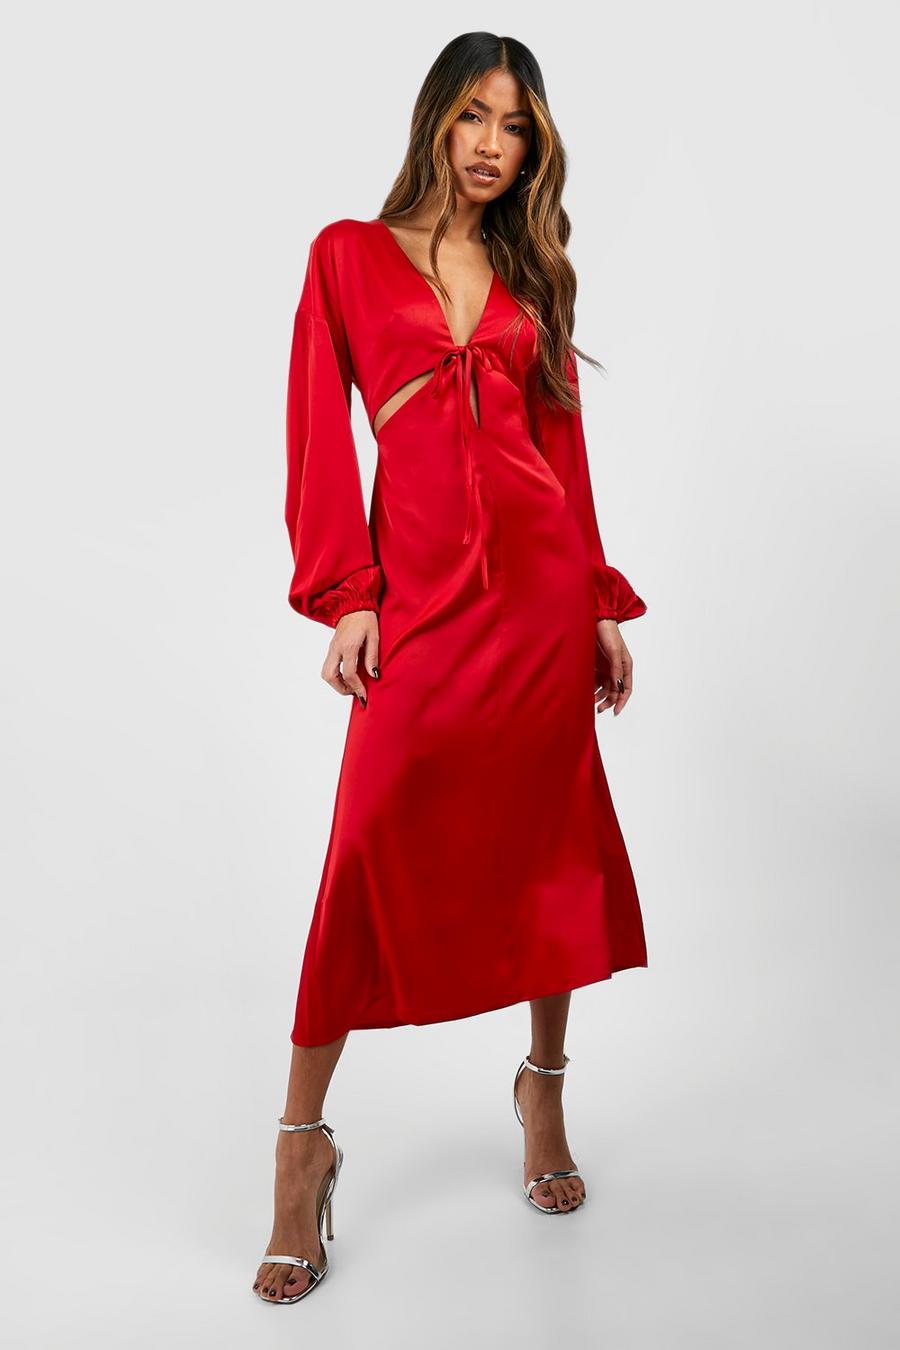 Cami Dresses, Silk & Satin Slip Dresses